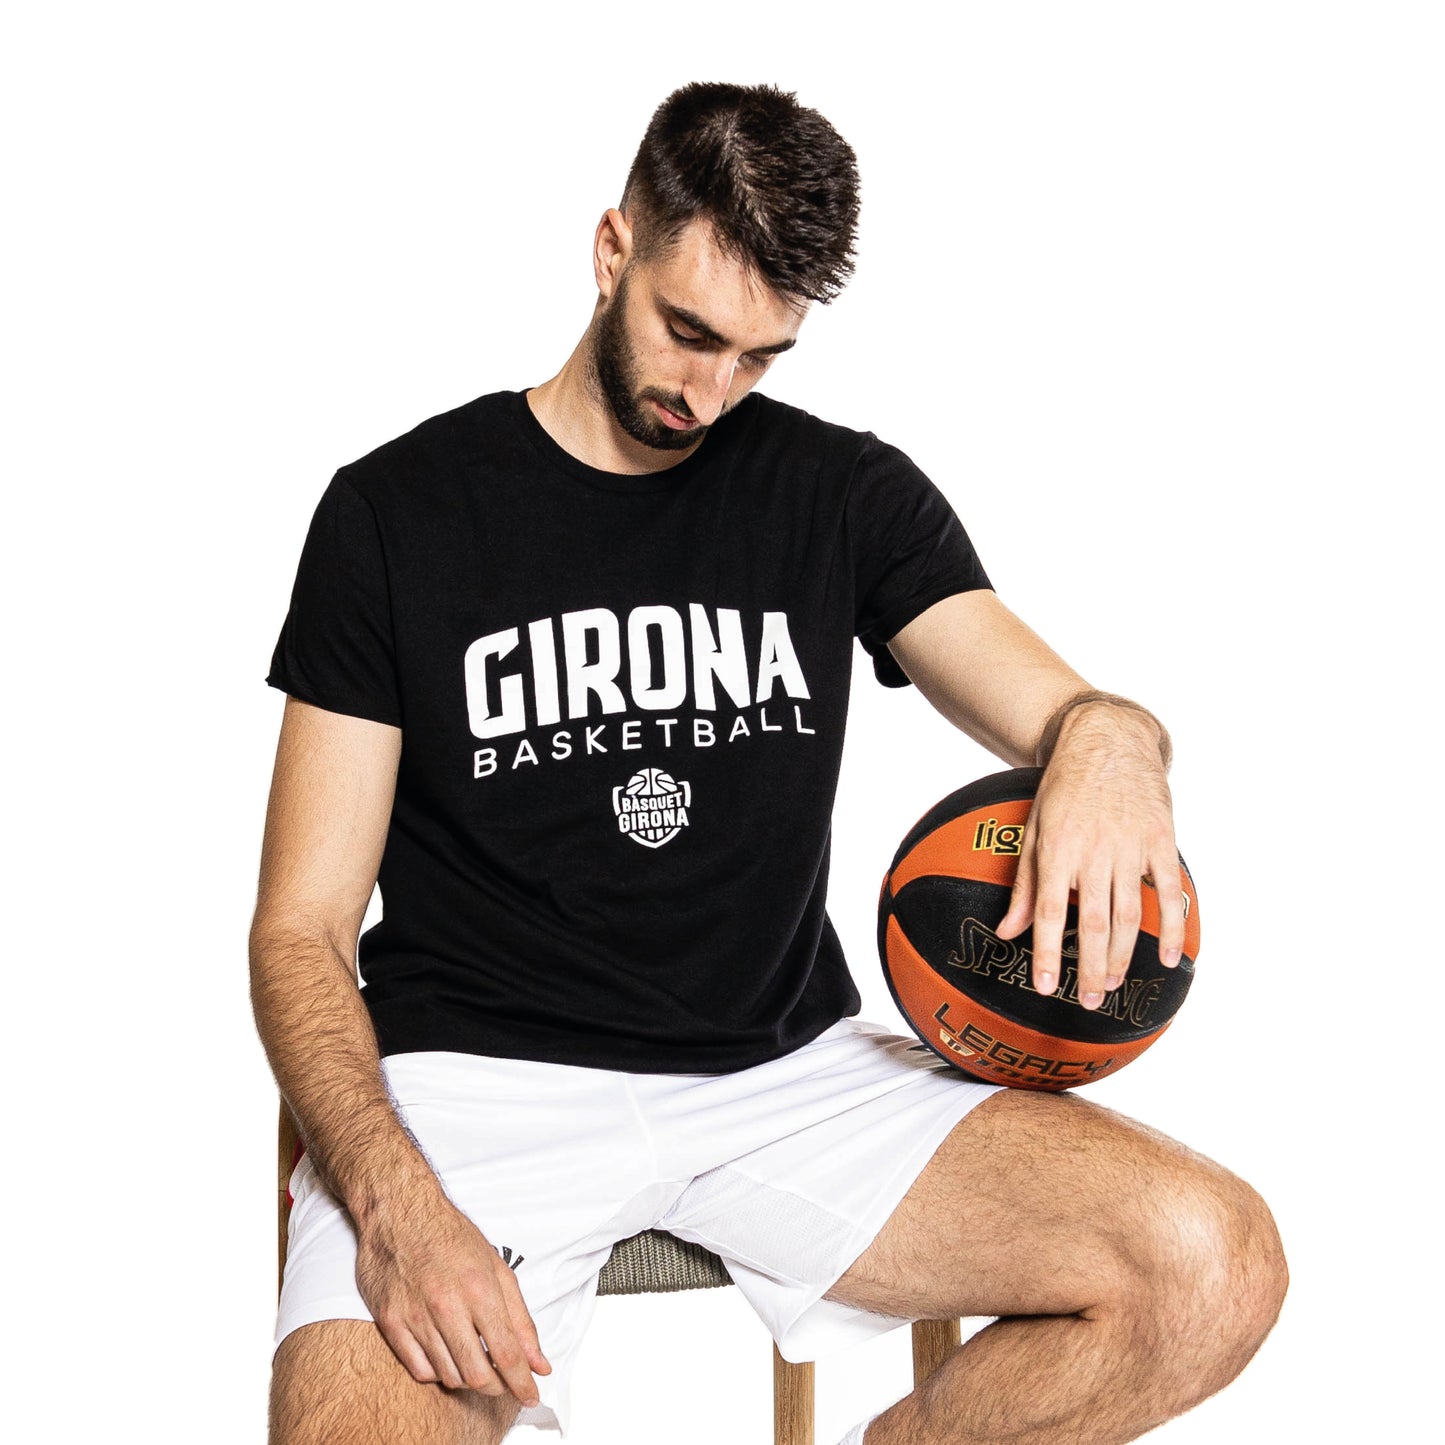 T-shirt Organic Cotton Basketball Girona Black Adult